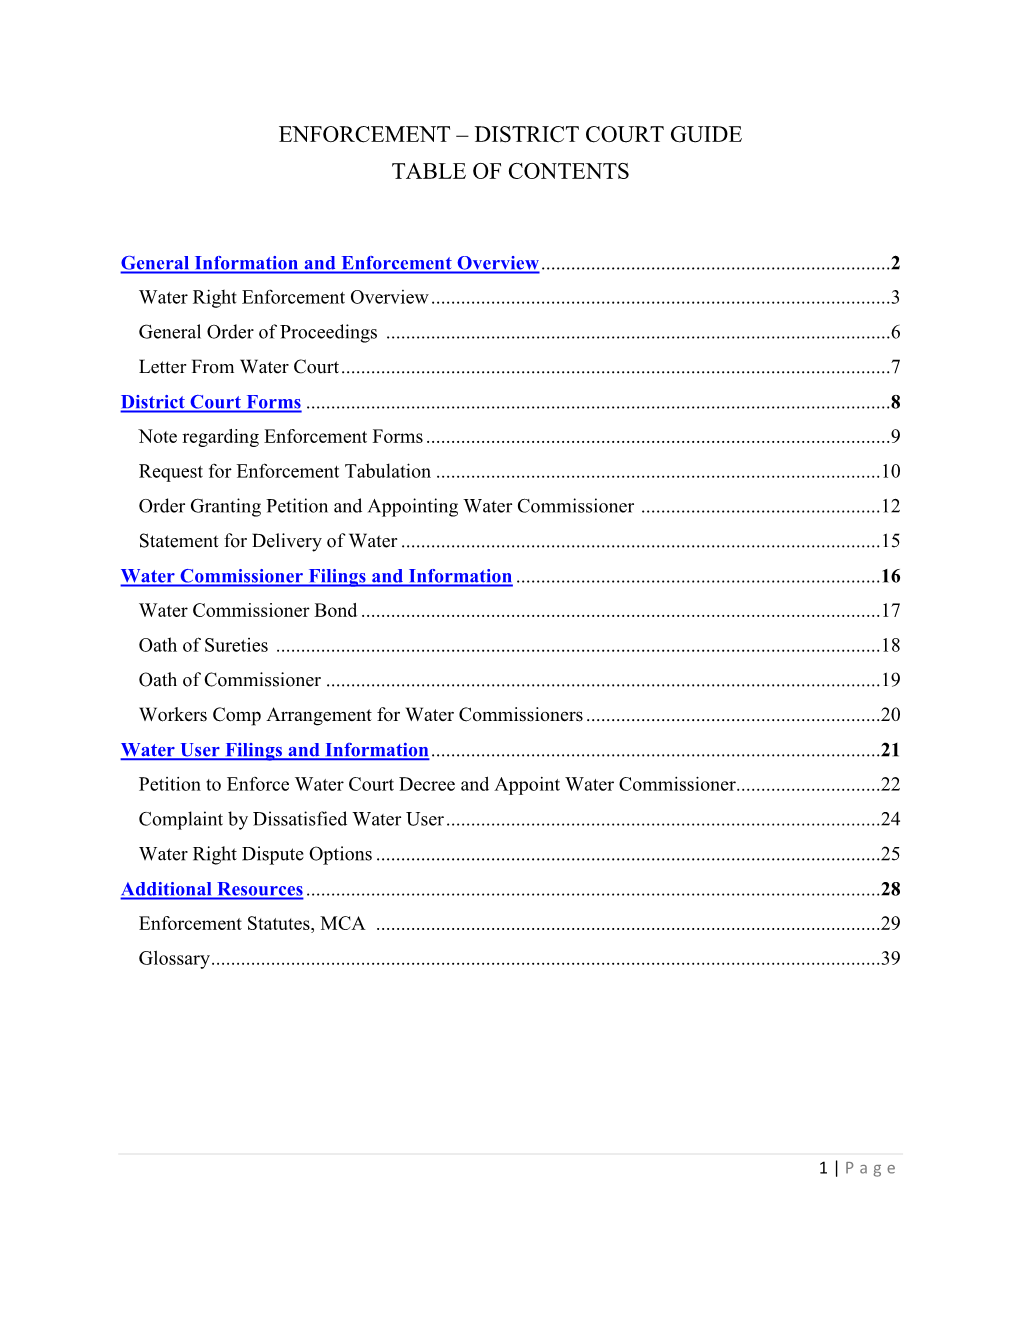 Enforcement – District Court Guide Table of Contents